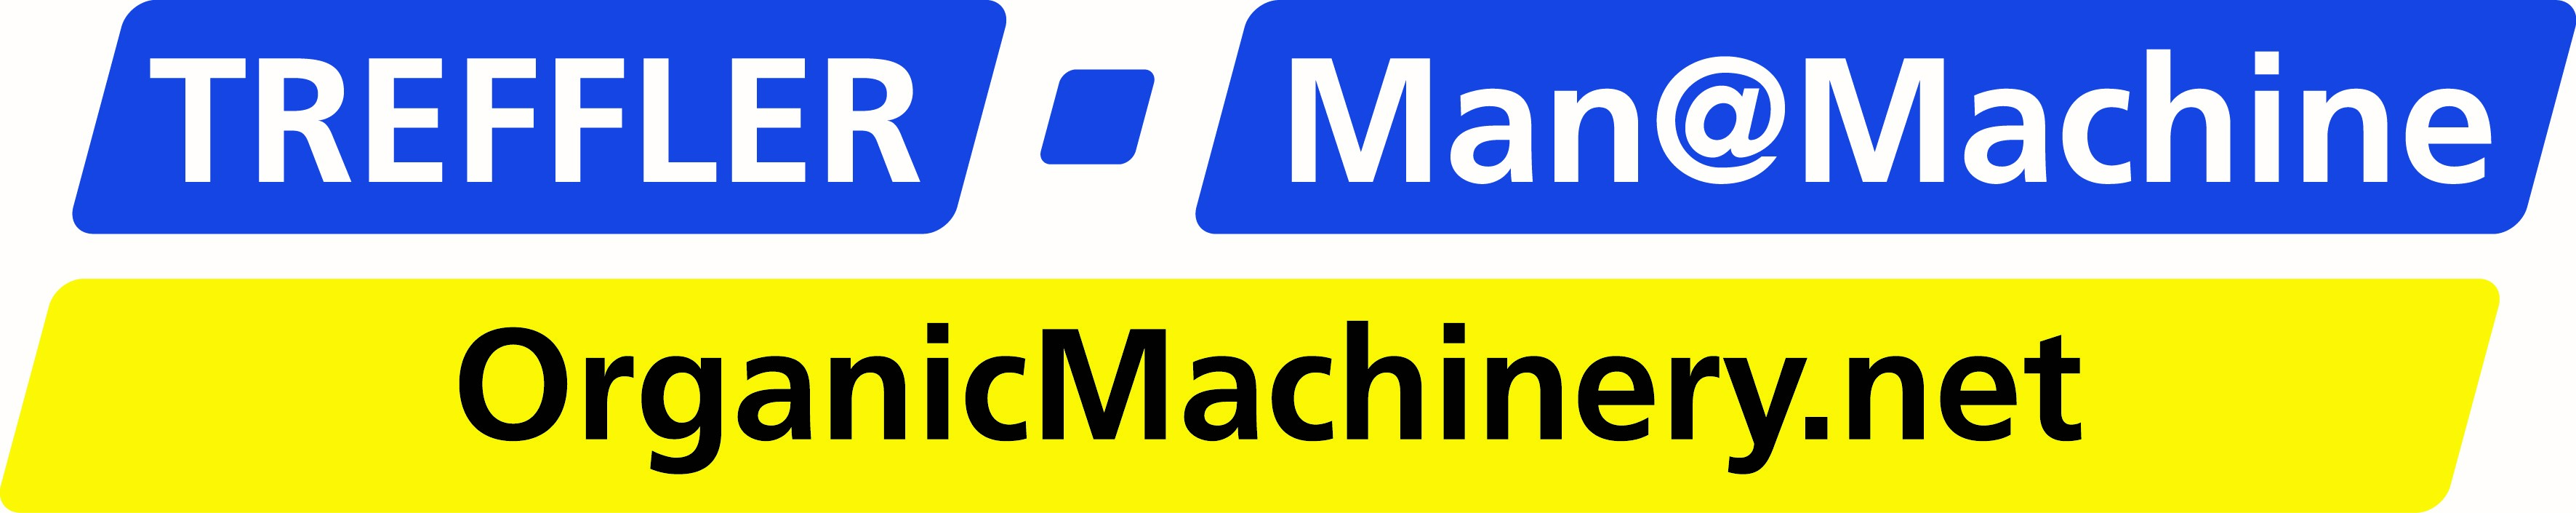 man@machine